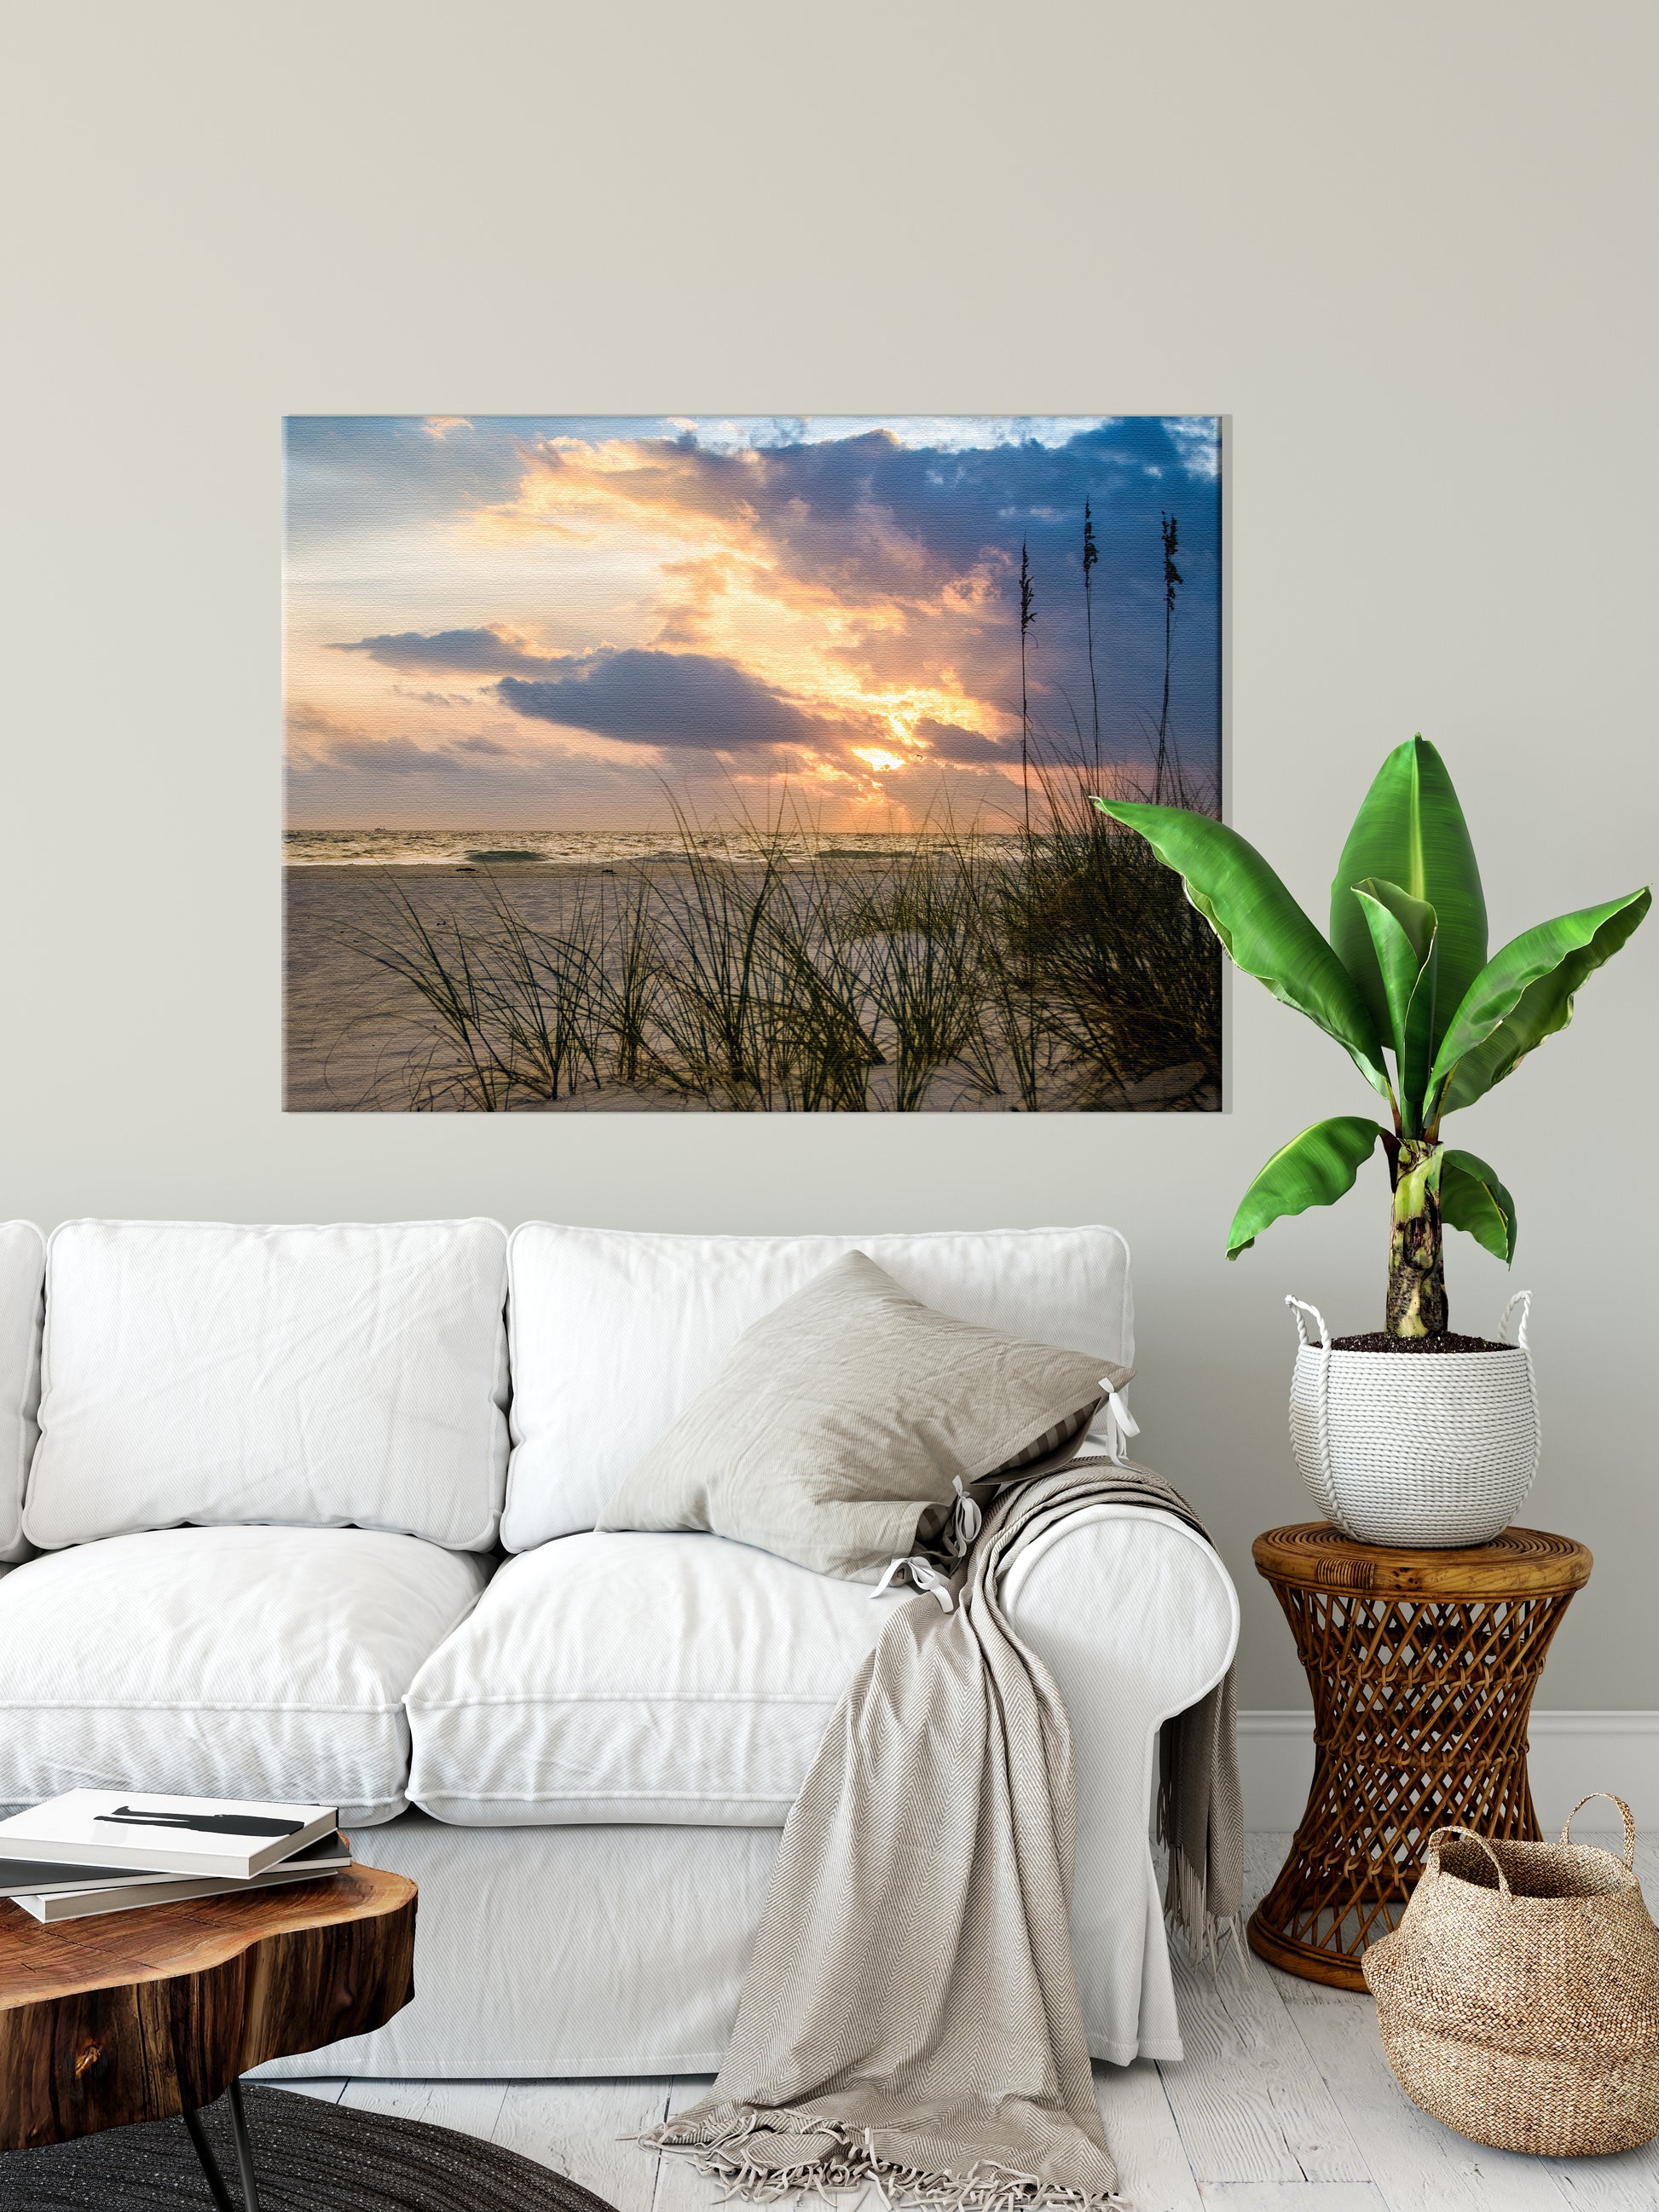 Beach Canvas Prints For Sale: Anna Maria Island Cloudy Beach Sunset 2 - Coastal / Beach / Seascape / Nature / Landscape Photo Canvas Wall Art Print - Decor - Artwork